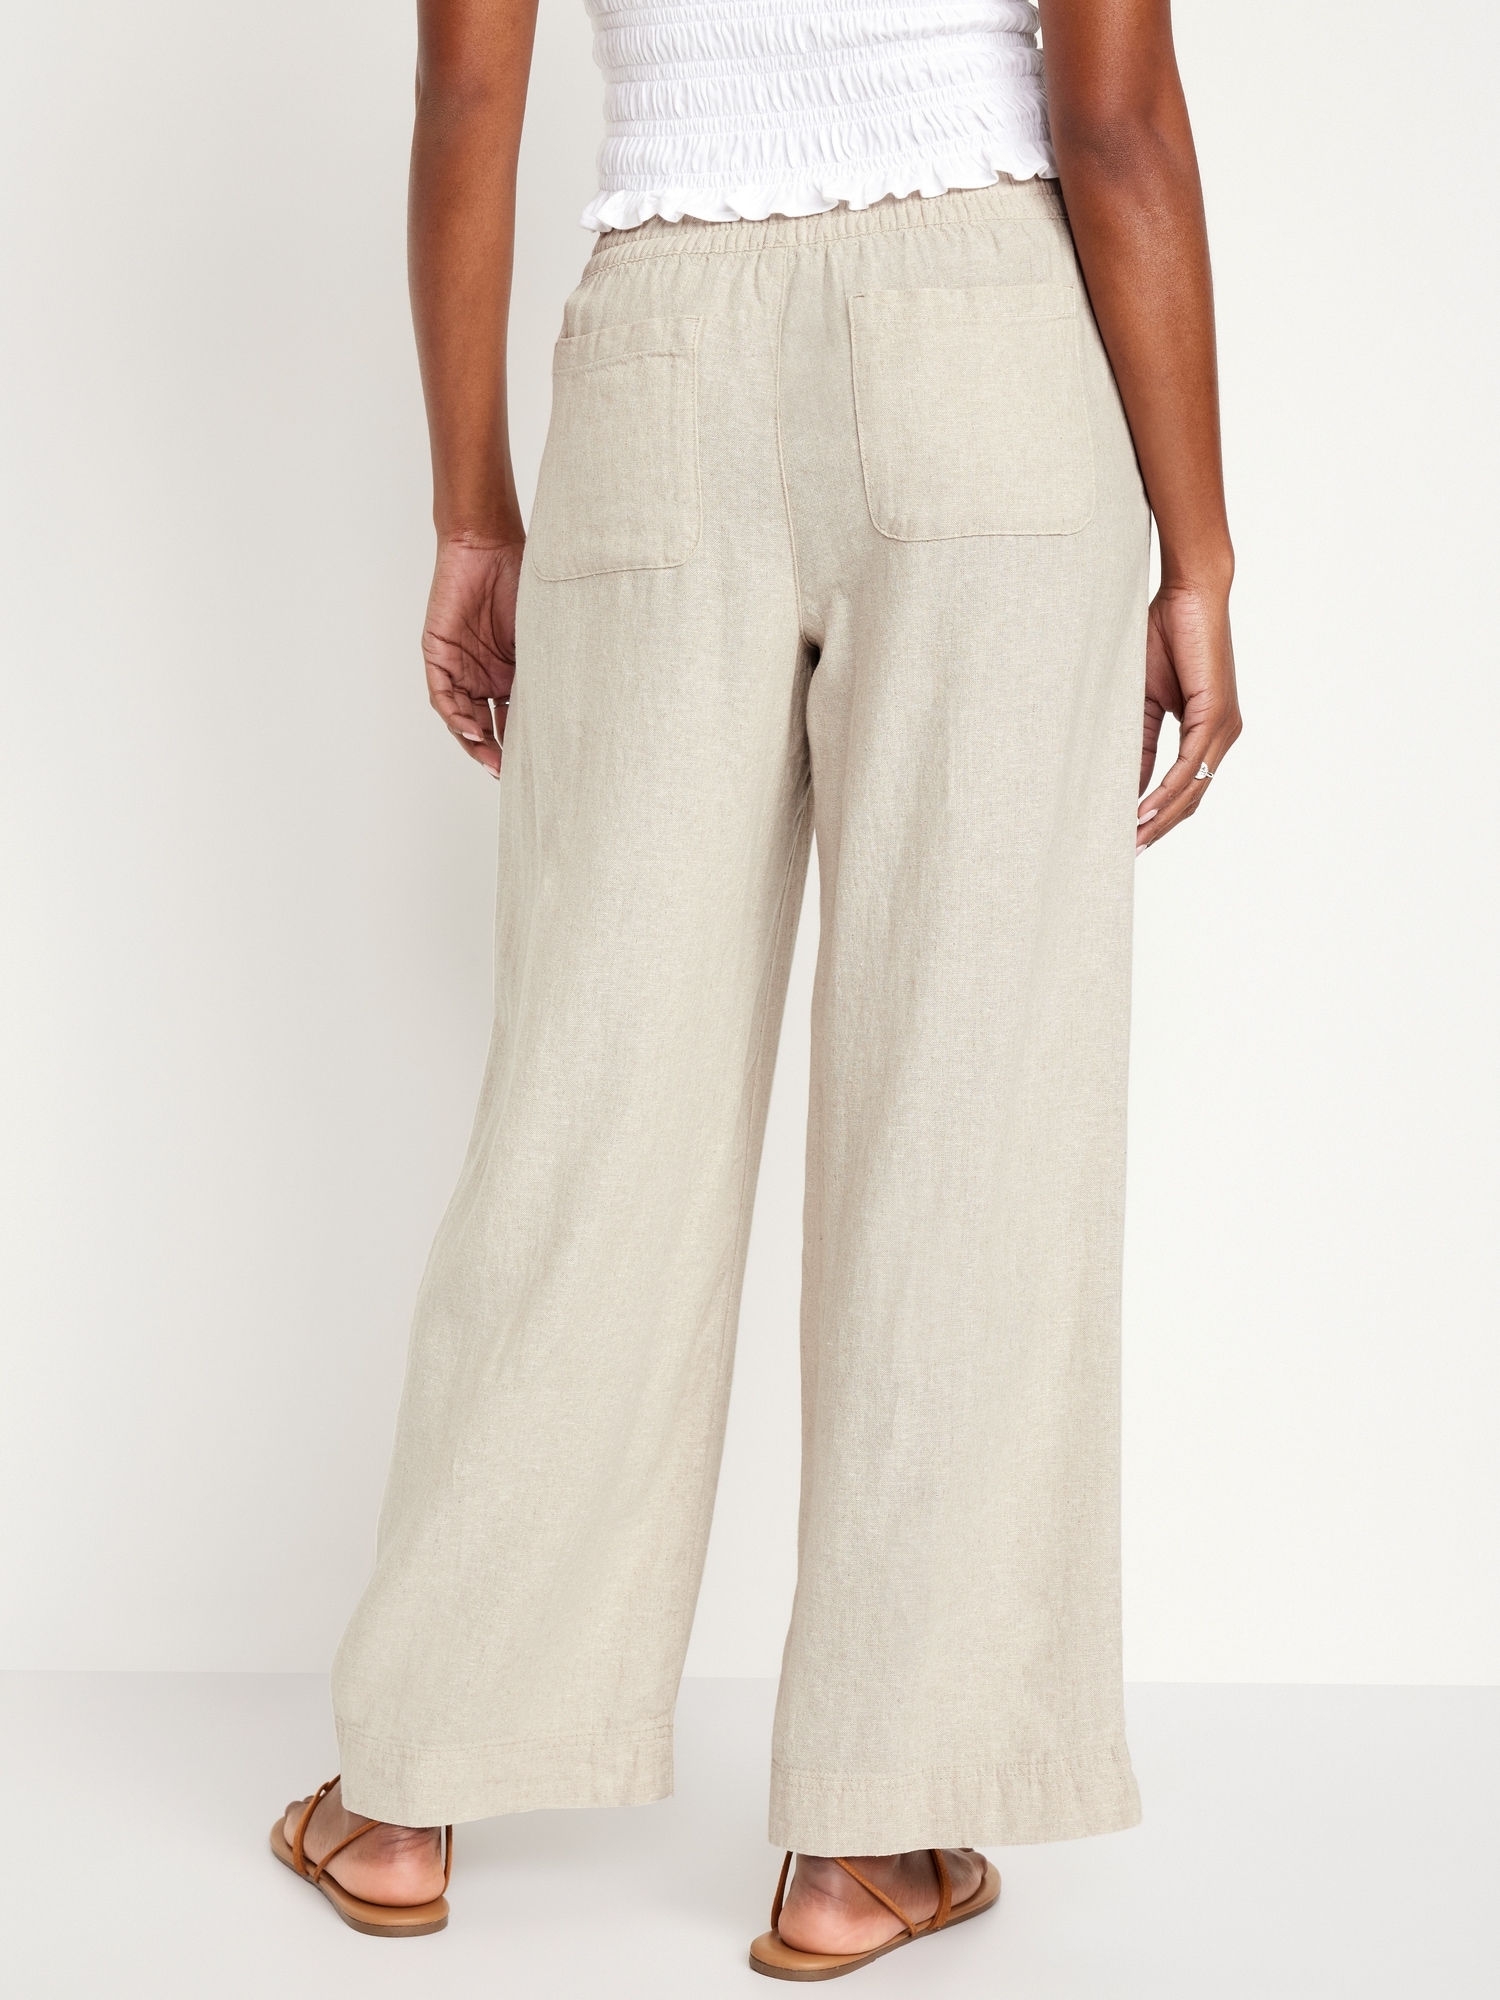 Natural Linen Pants, Summer Pants, Womens Pants, Beige Pants